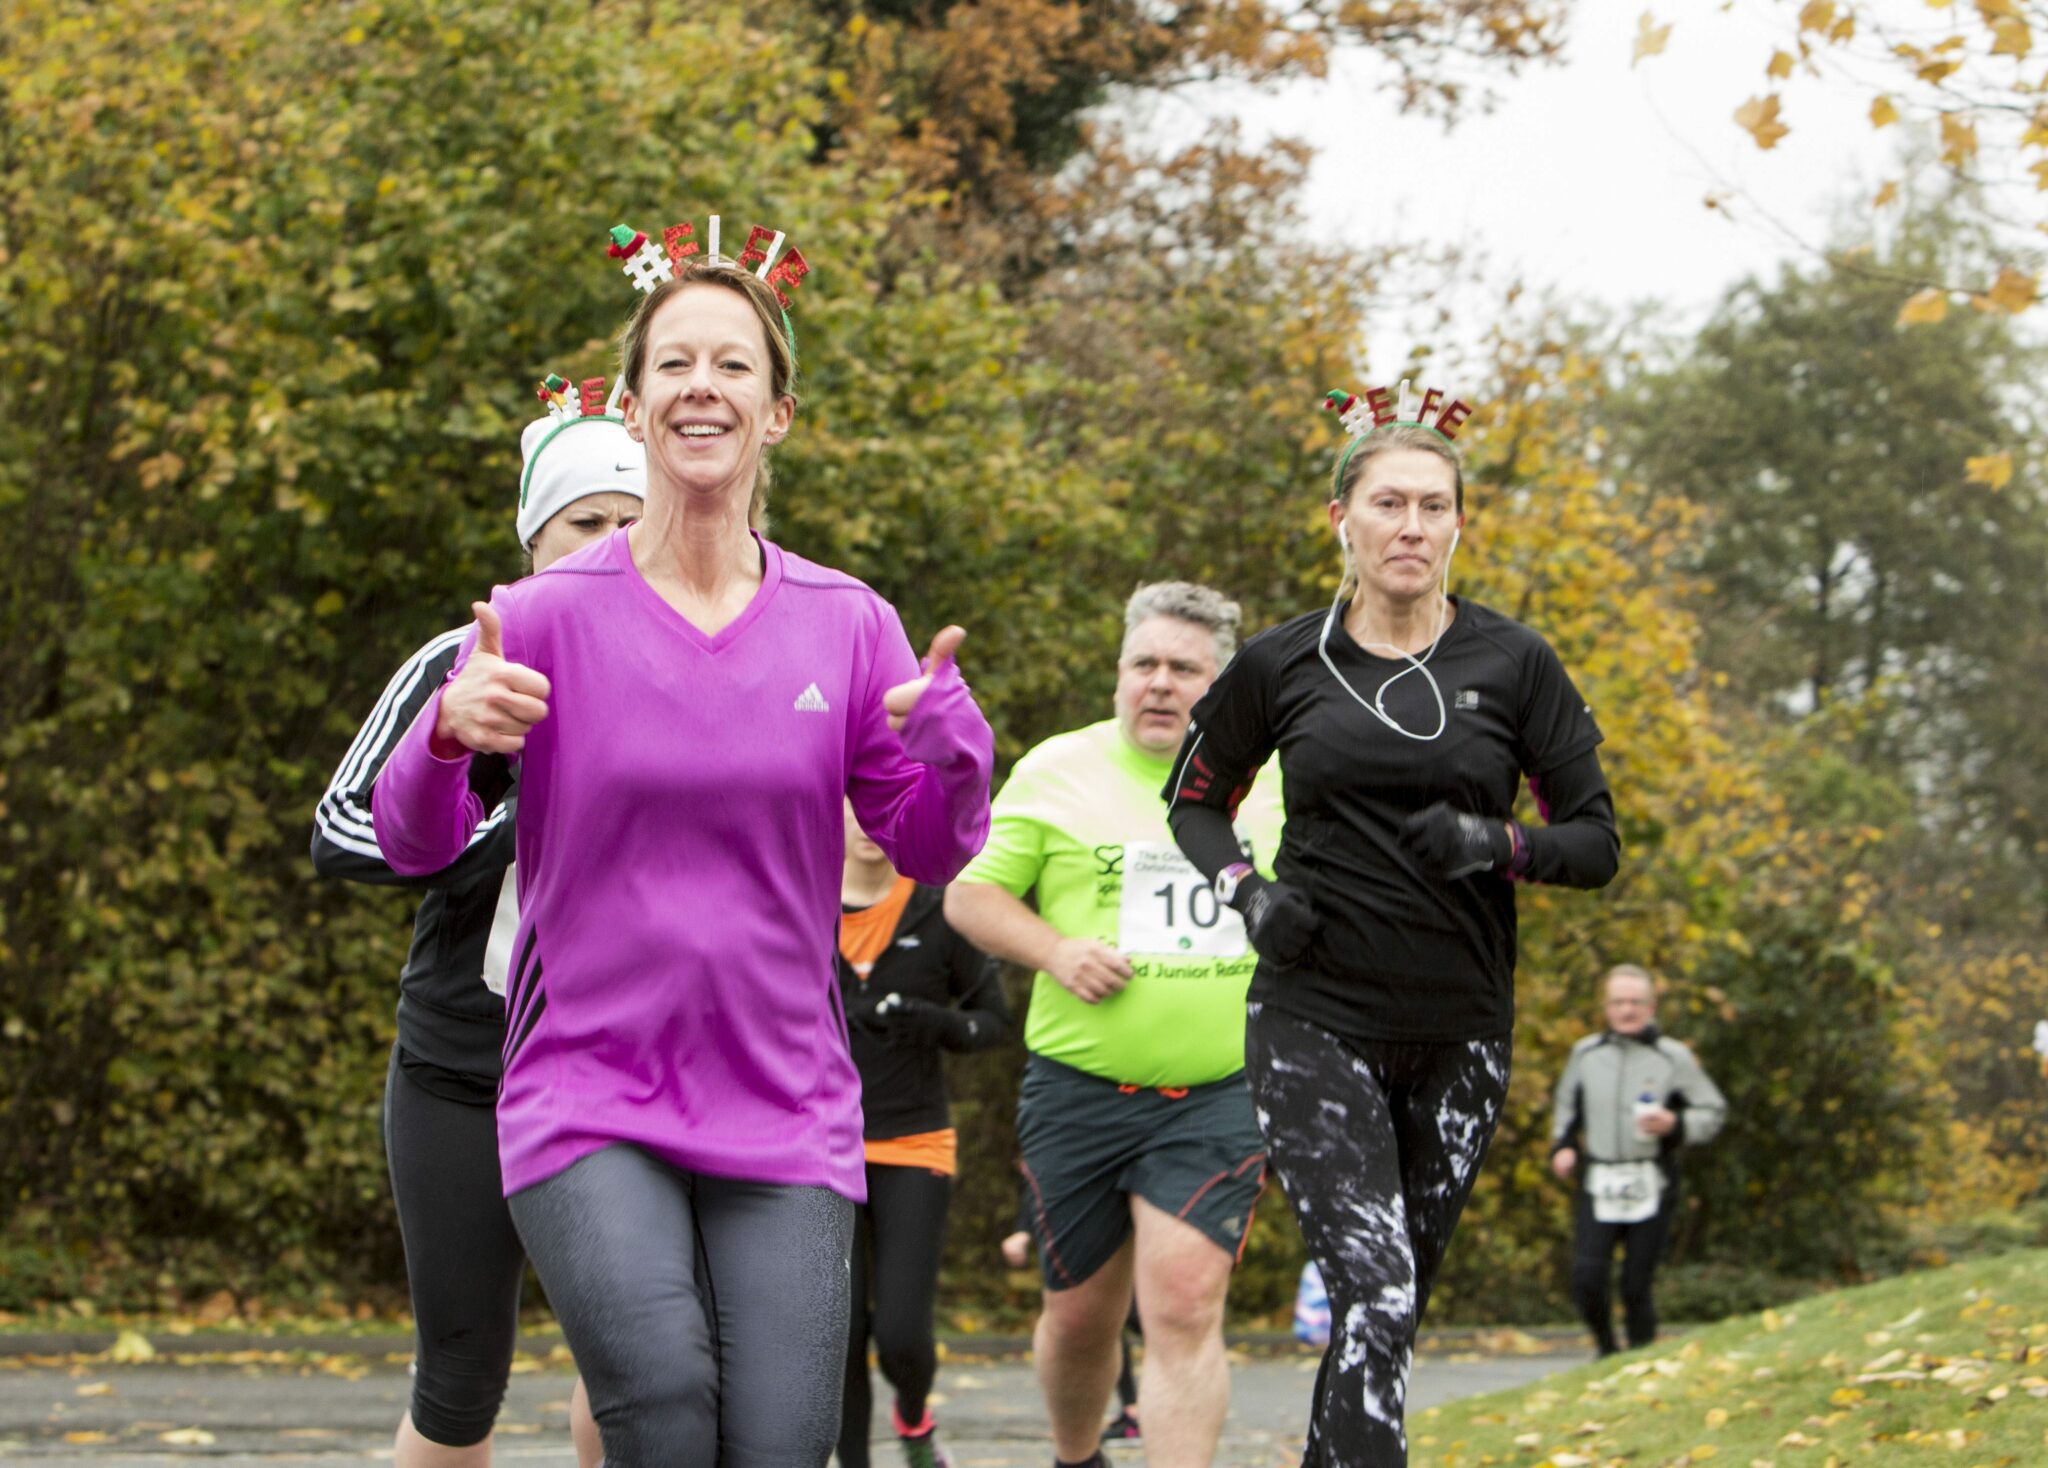 Croxley Park 10K Run | Smiling Runners